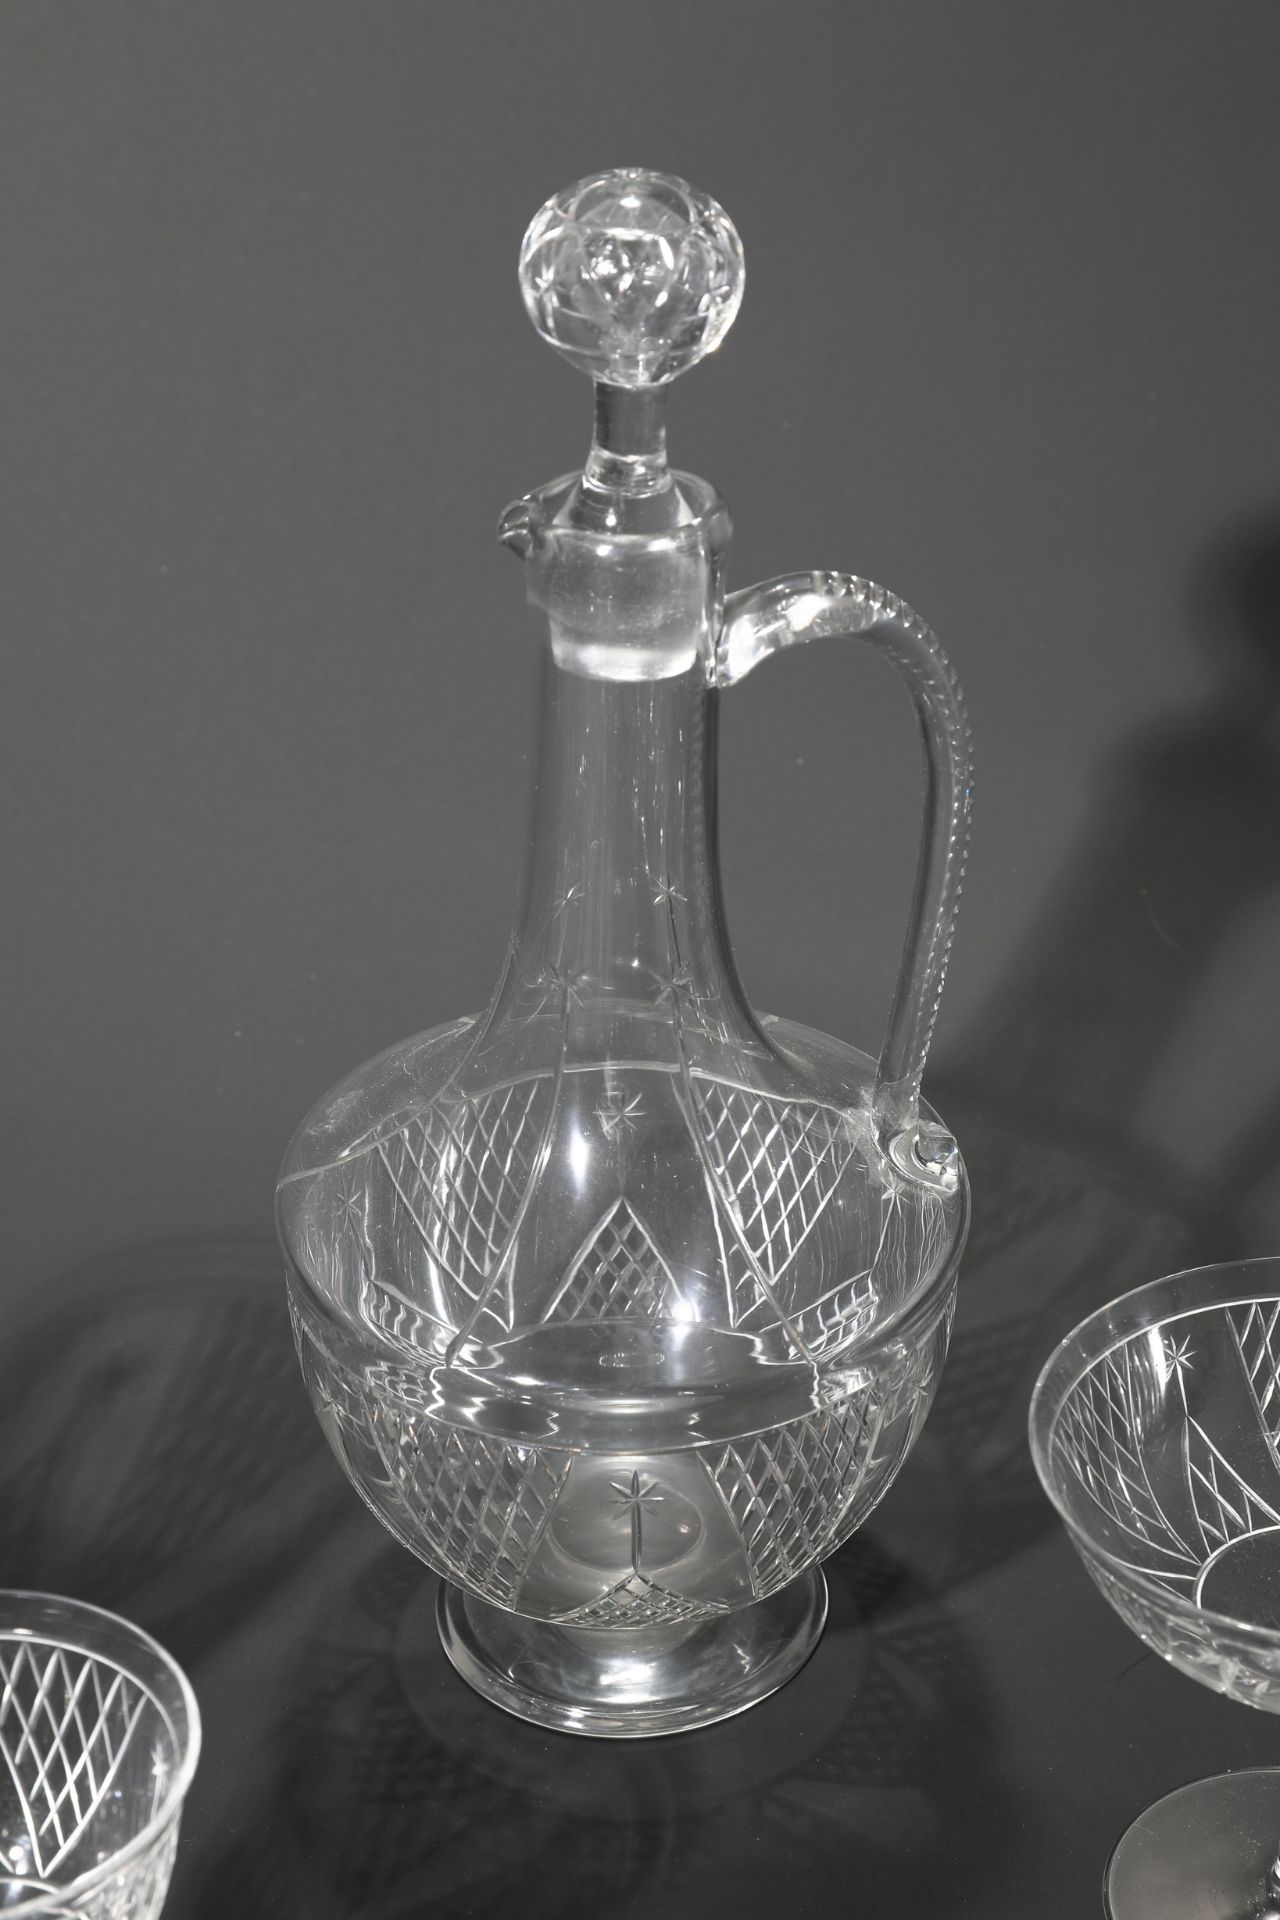 Josef Hoffmann, Wiener Werkstätte, glass service, model 200-DEKOR 1 - Image 7 of 11